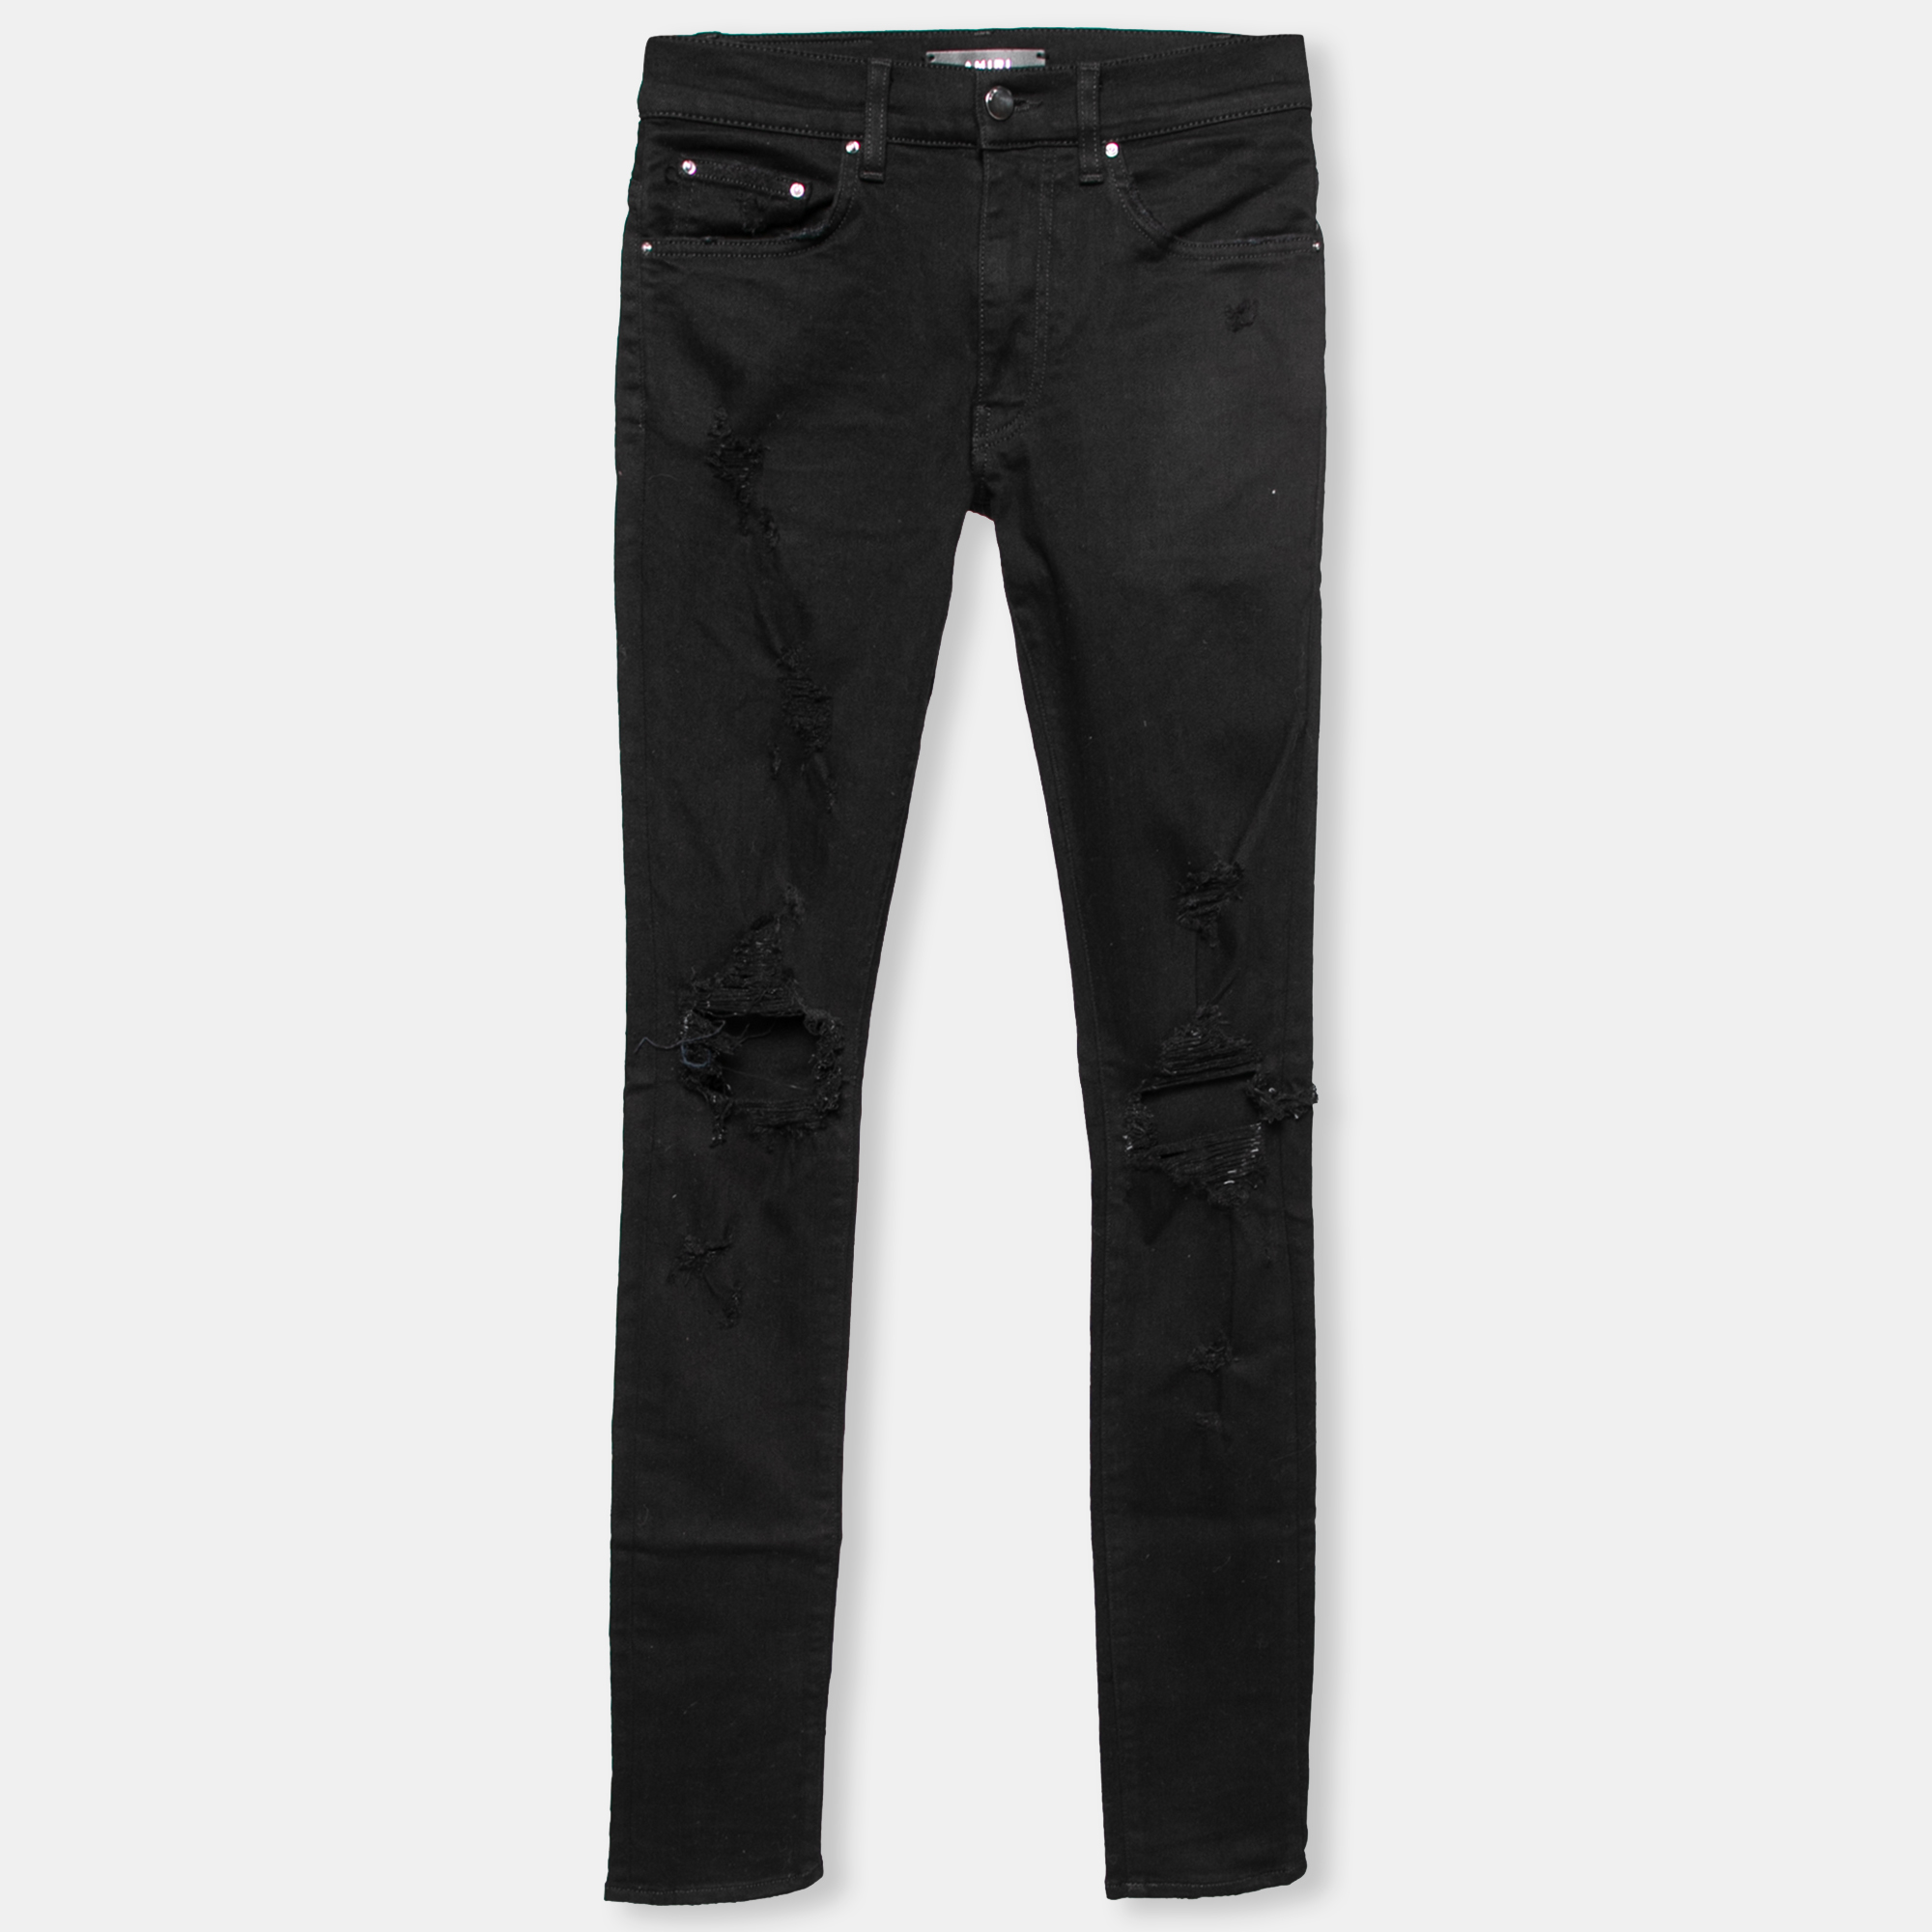 Black Denim Distressed Skinny Jeans